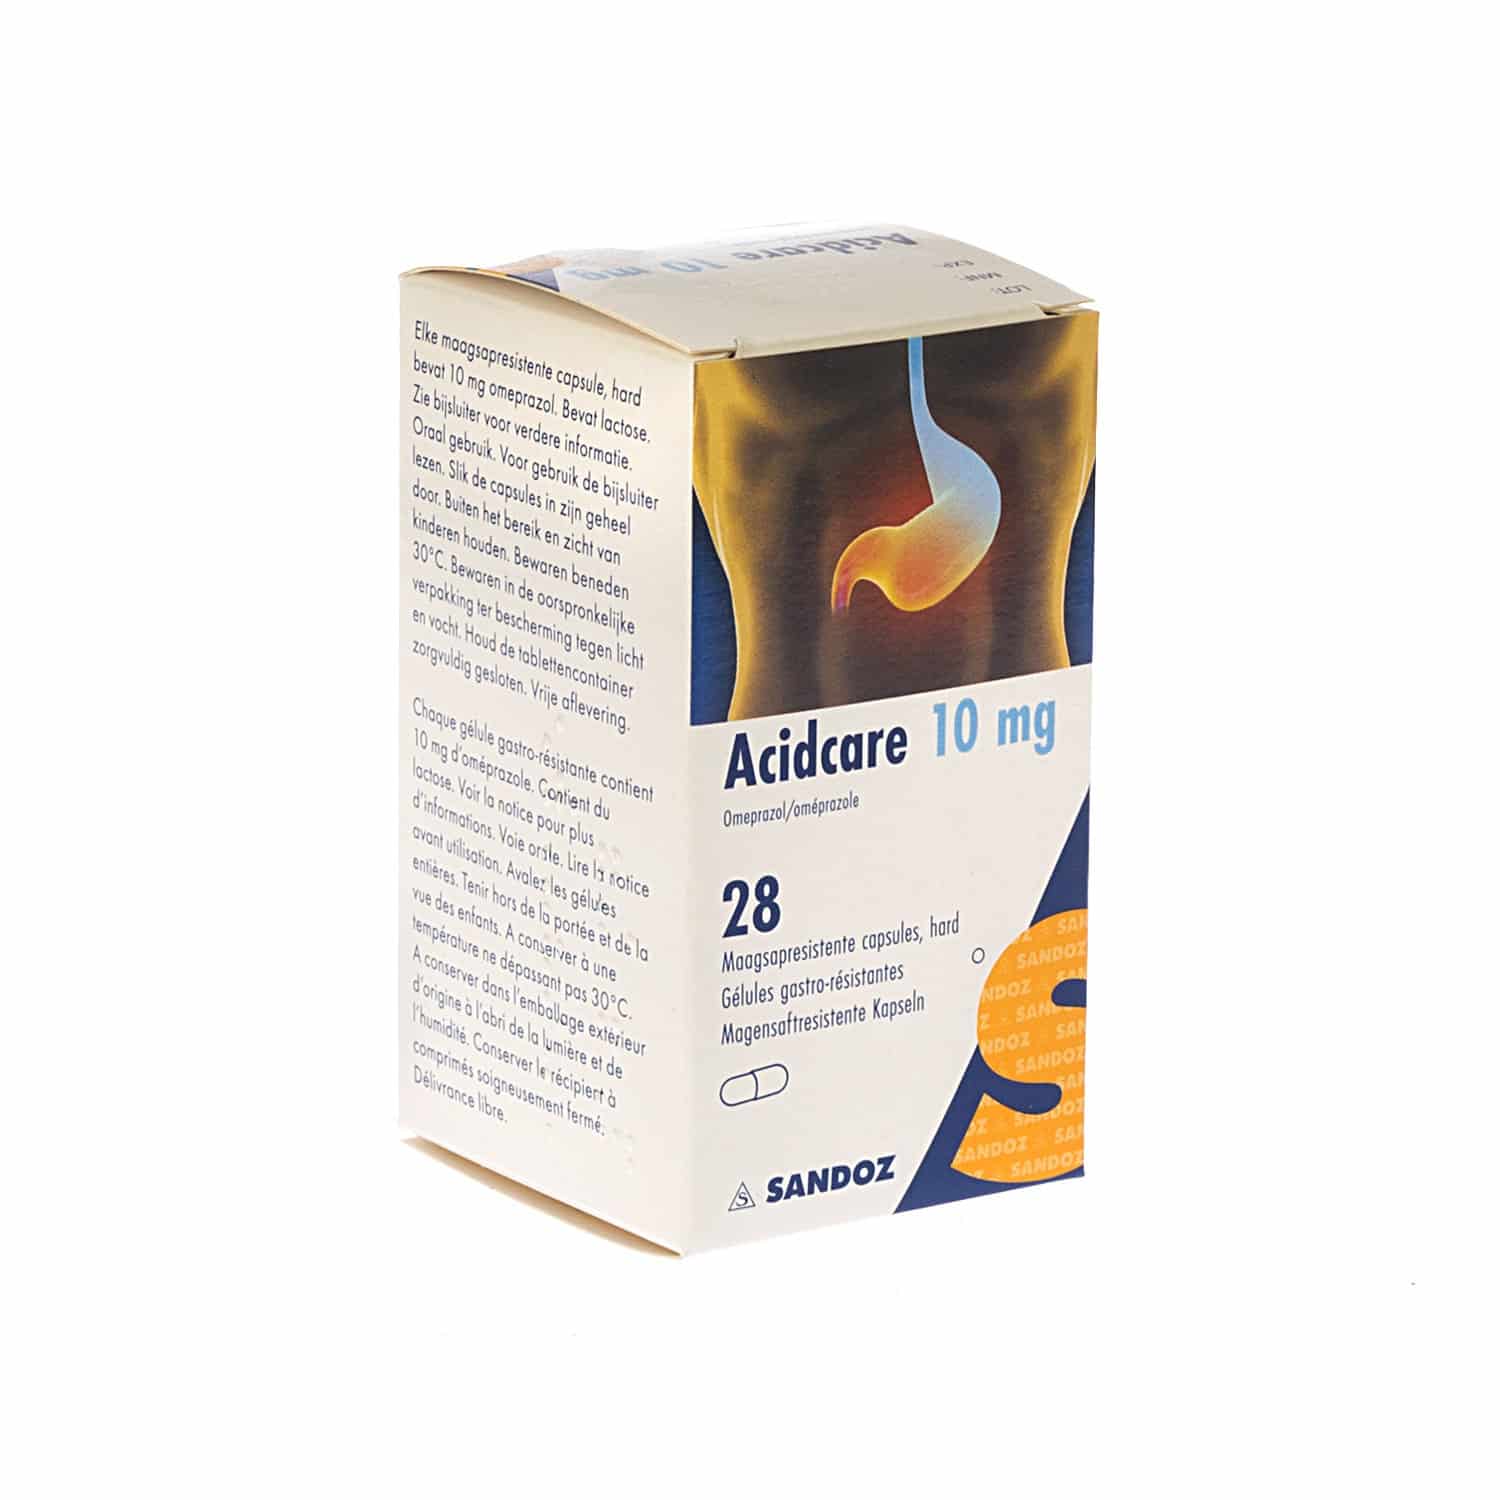 Acidcare 10 mg